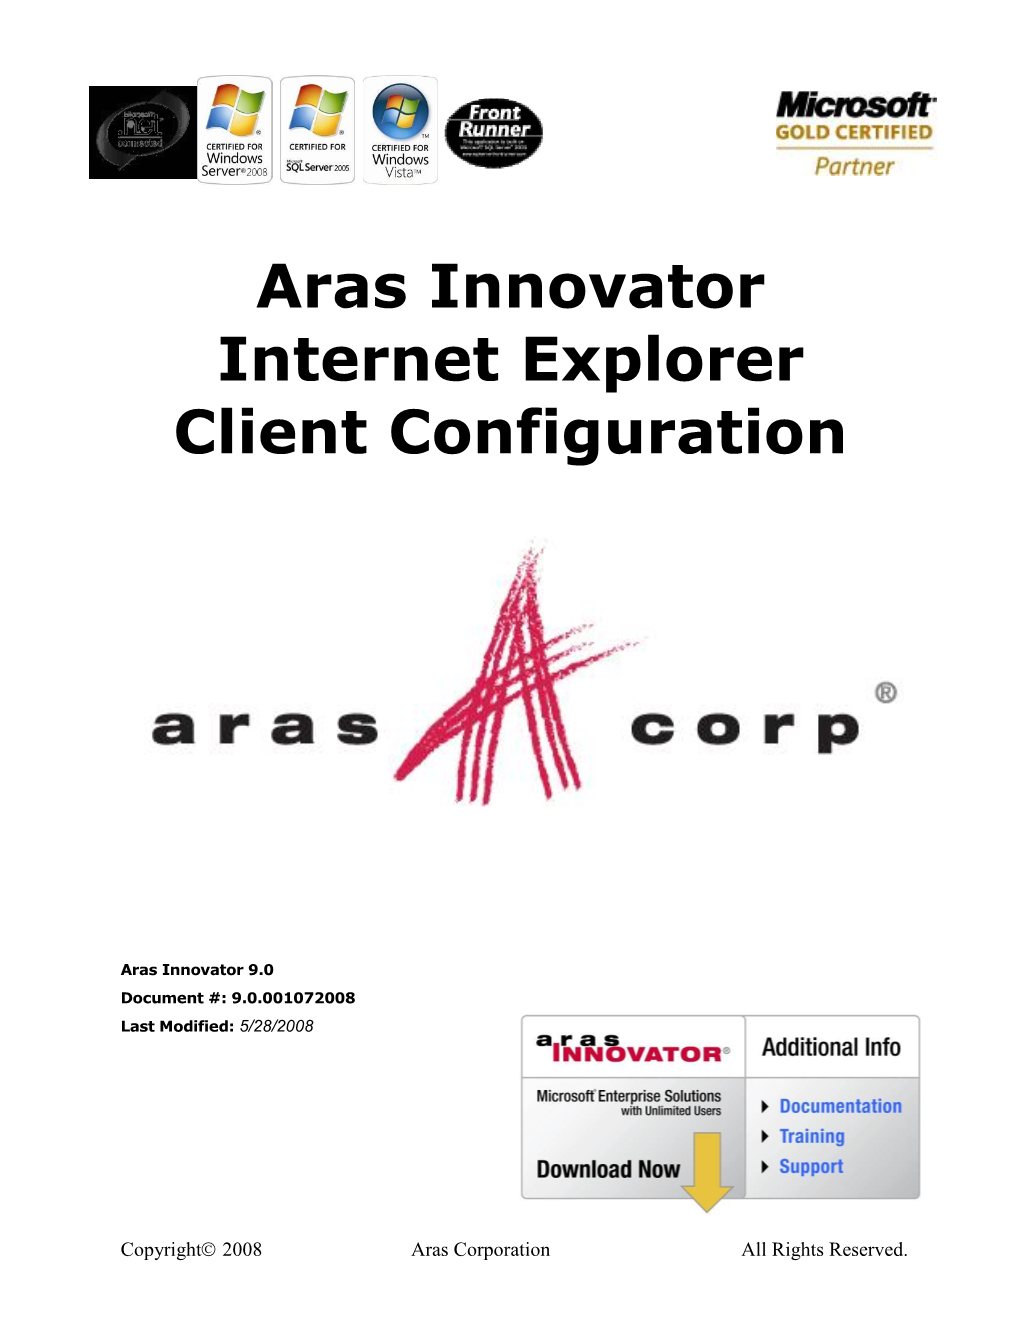 Aras Innovator Internet Explorer Client Configuration